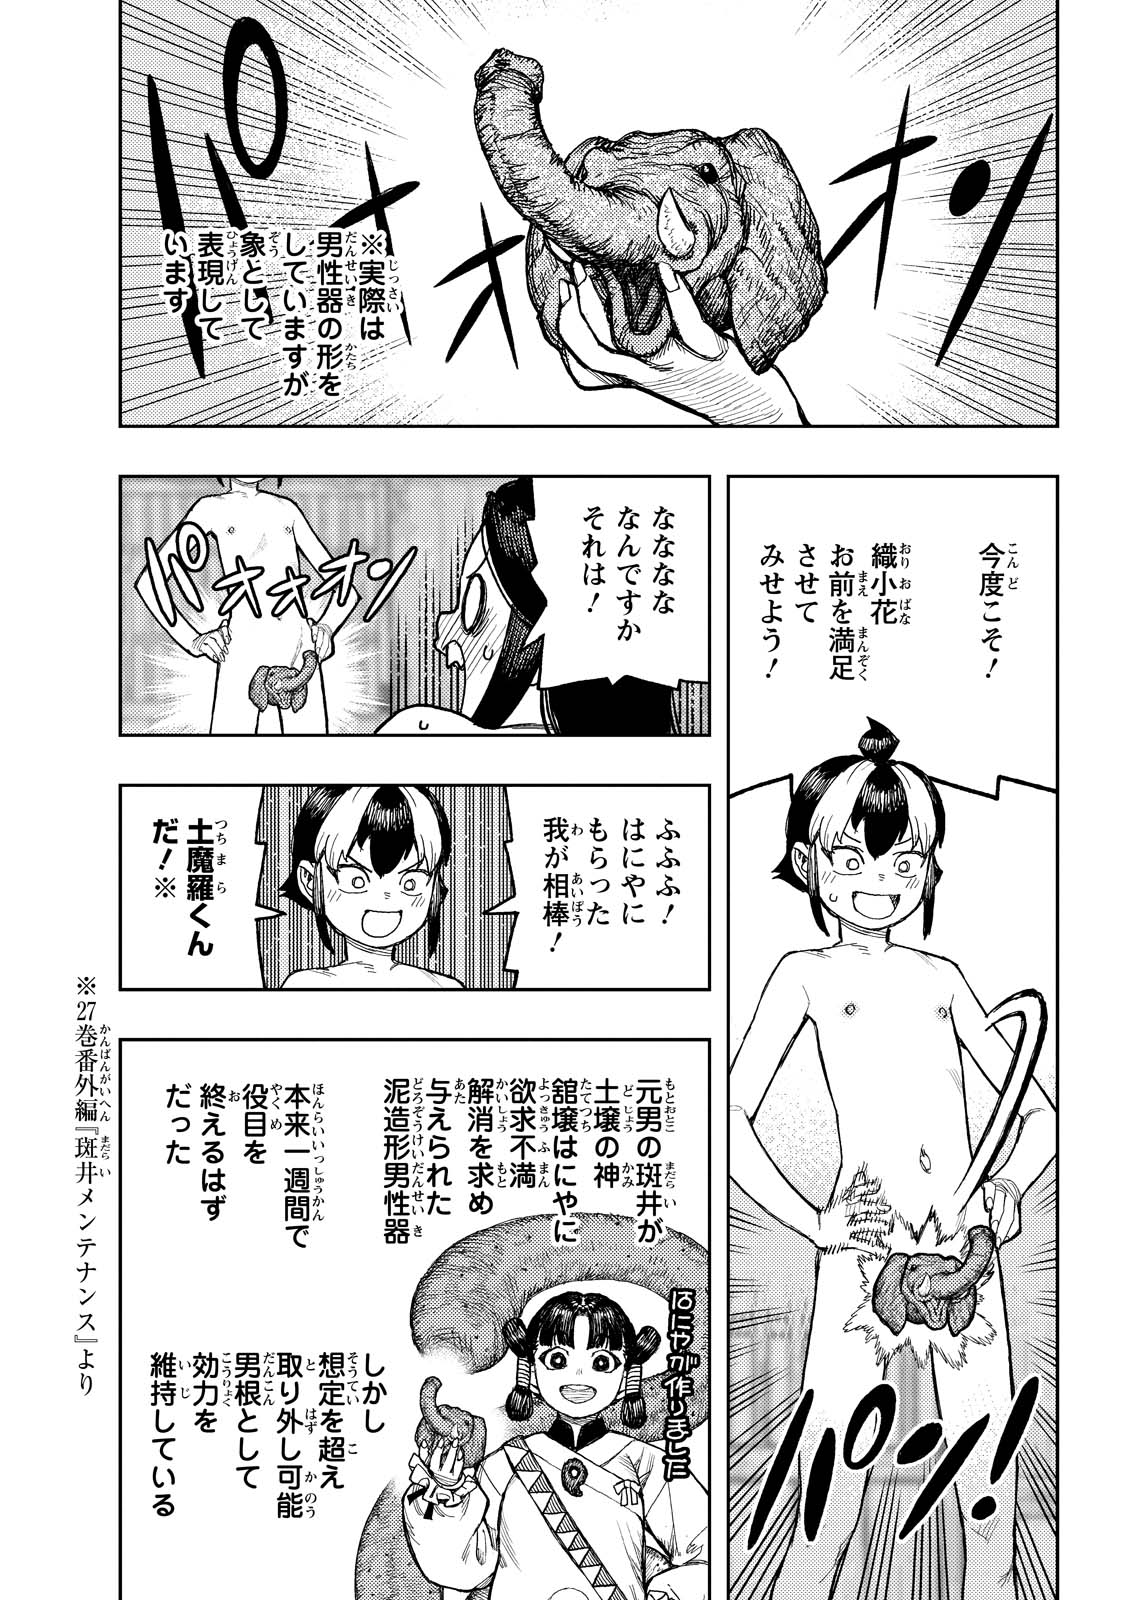 Tsugumomo - Chapter 167 - Page 17